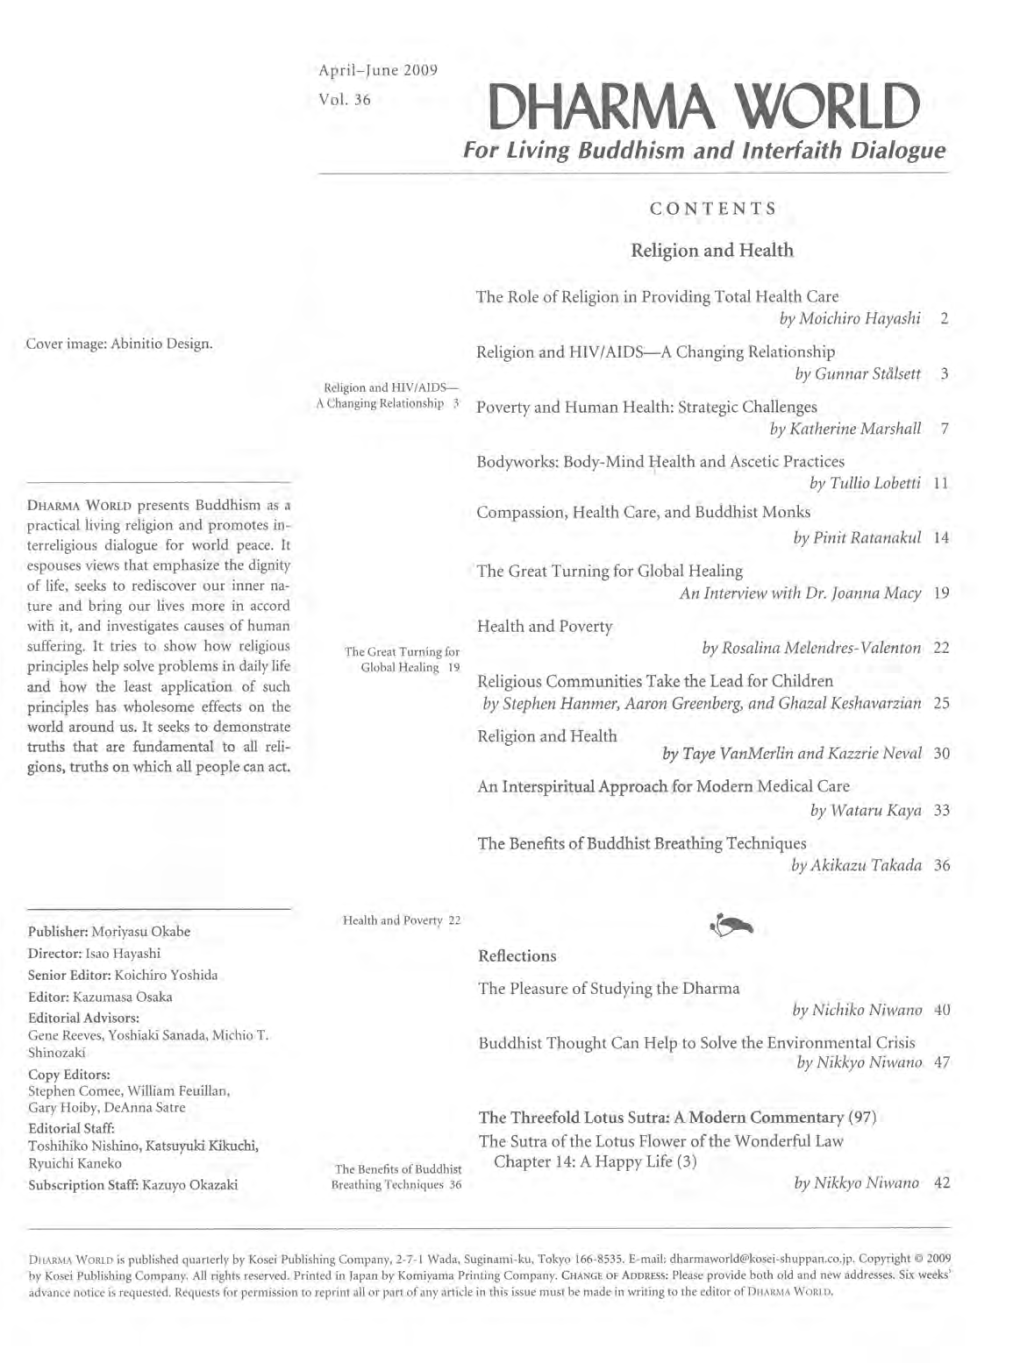 April-June 2009, Volume 36(PDF)